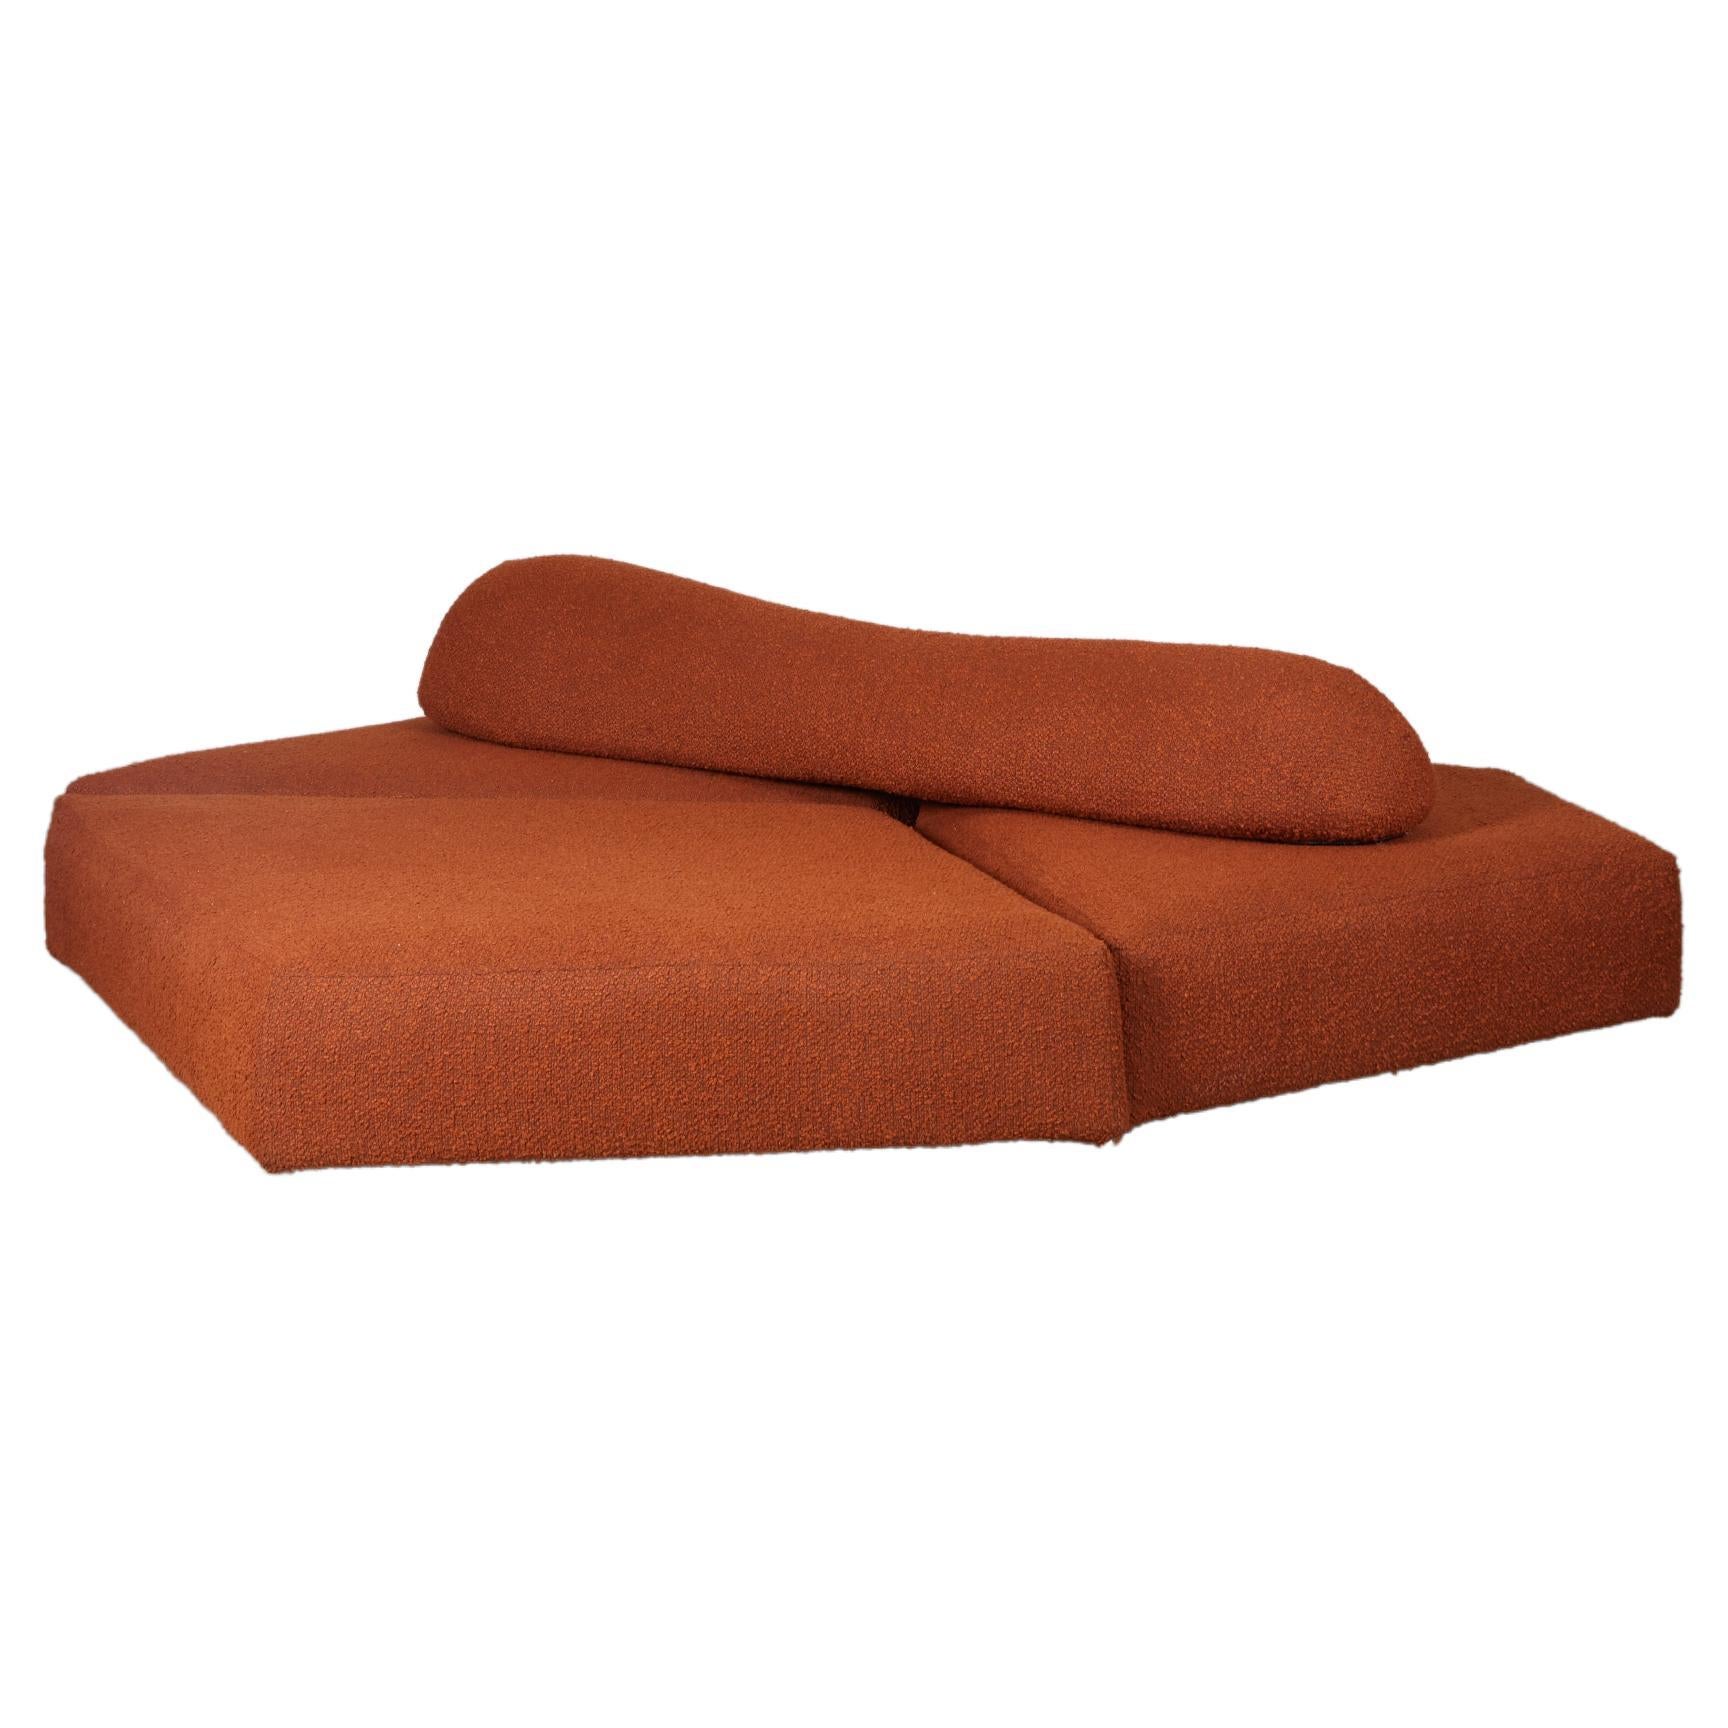 Das Sofa On the Rocks des Designers Francesco Binfaré